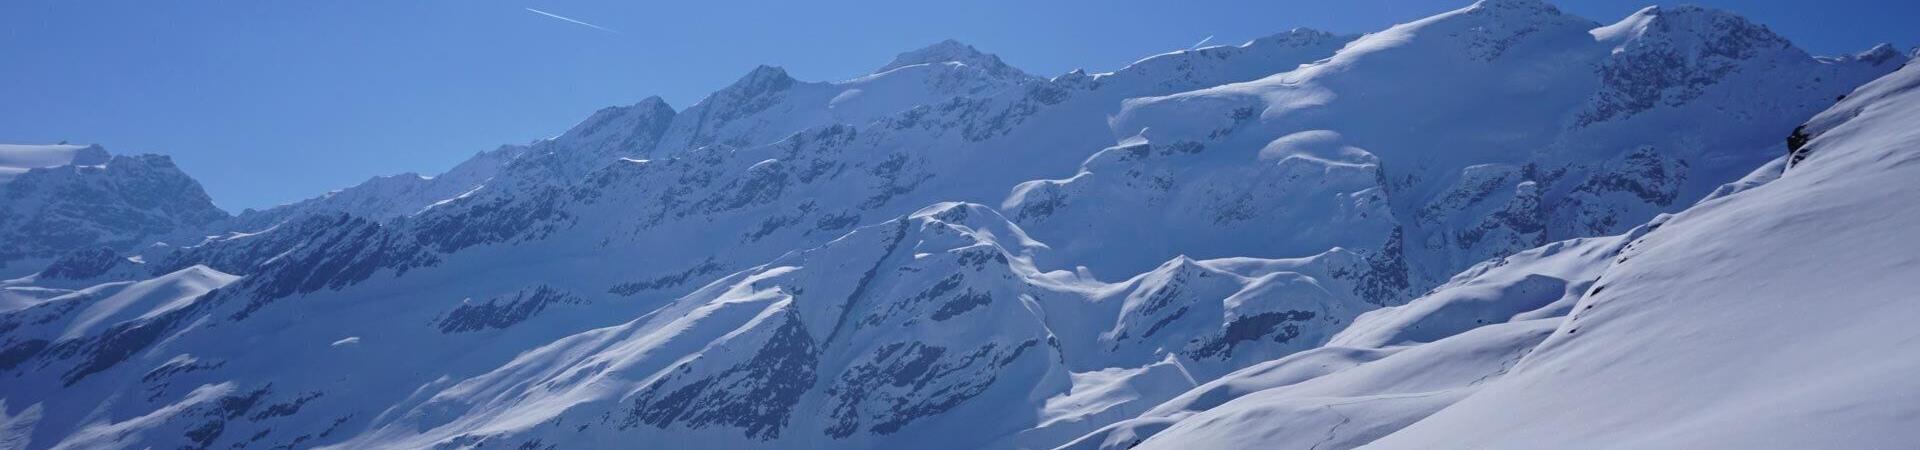 Skitour zur Valbenairspitze